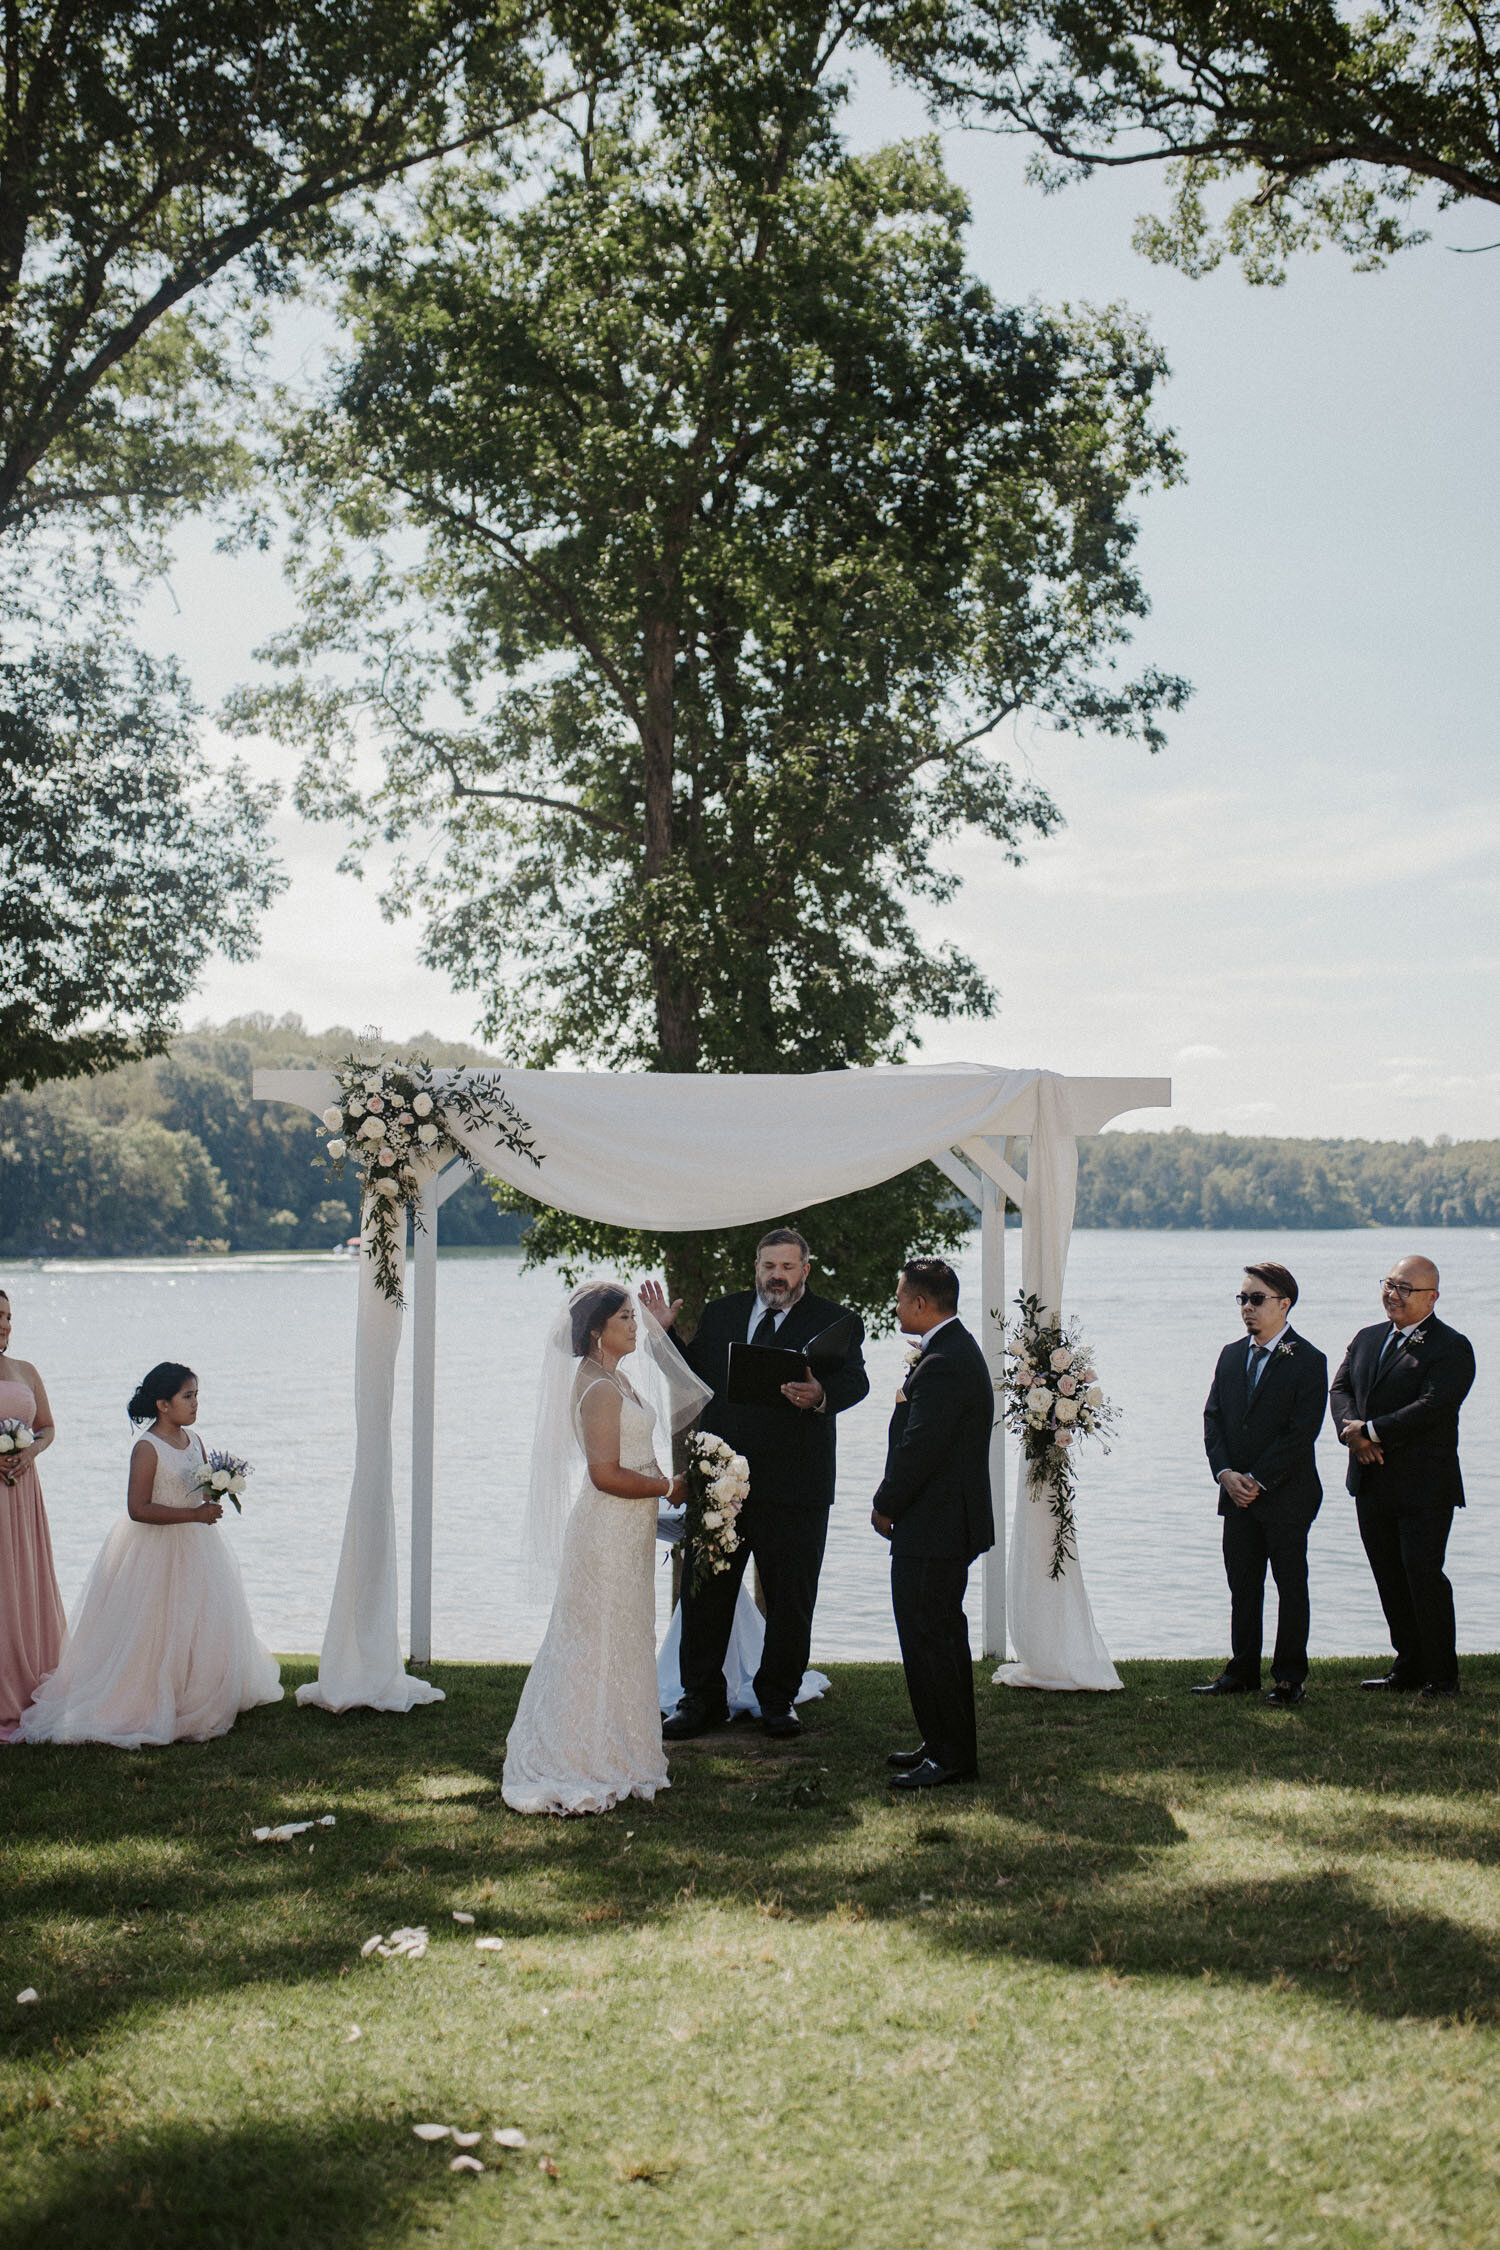 Greensboro Winston-Salem, NC Wedding Photography at Belews Lake | Bella Collina Mansion Ceremony | Kayli LaFon Wedding Photographer